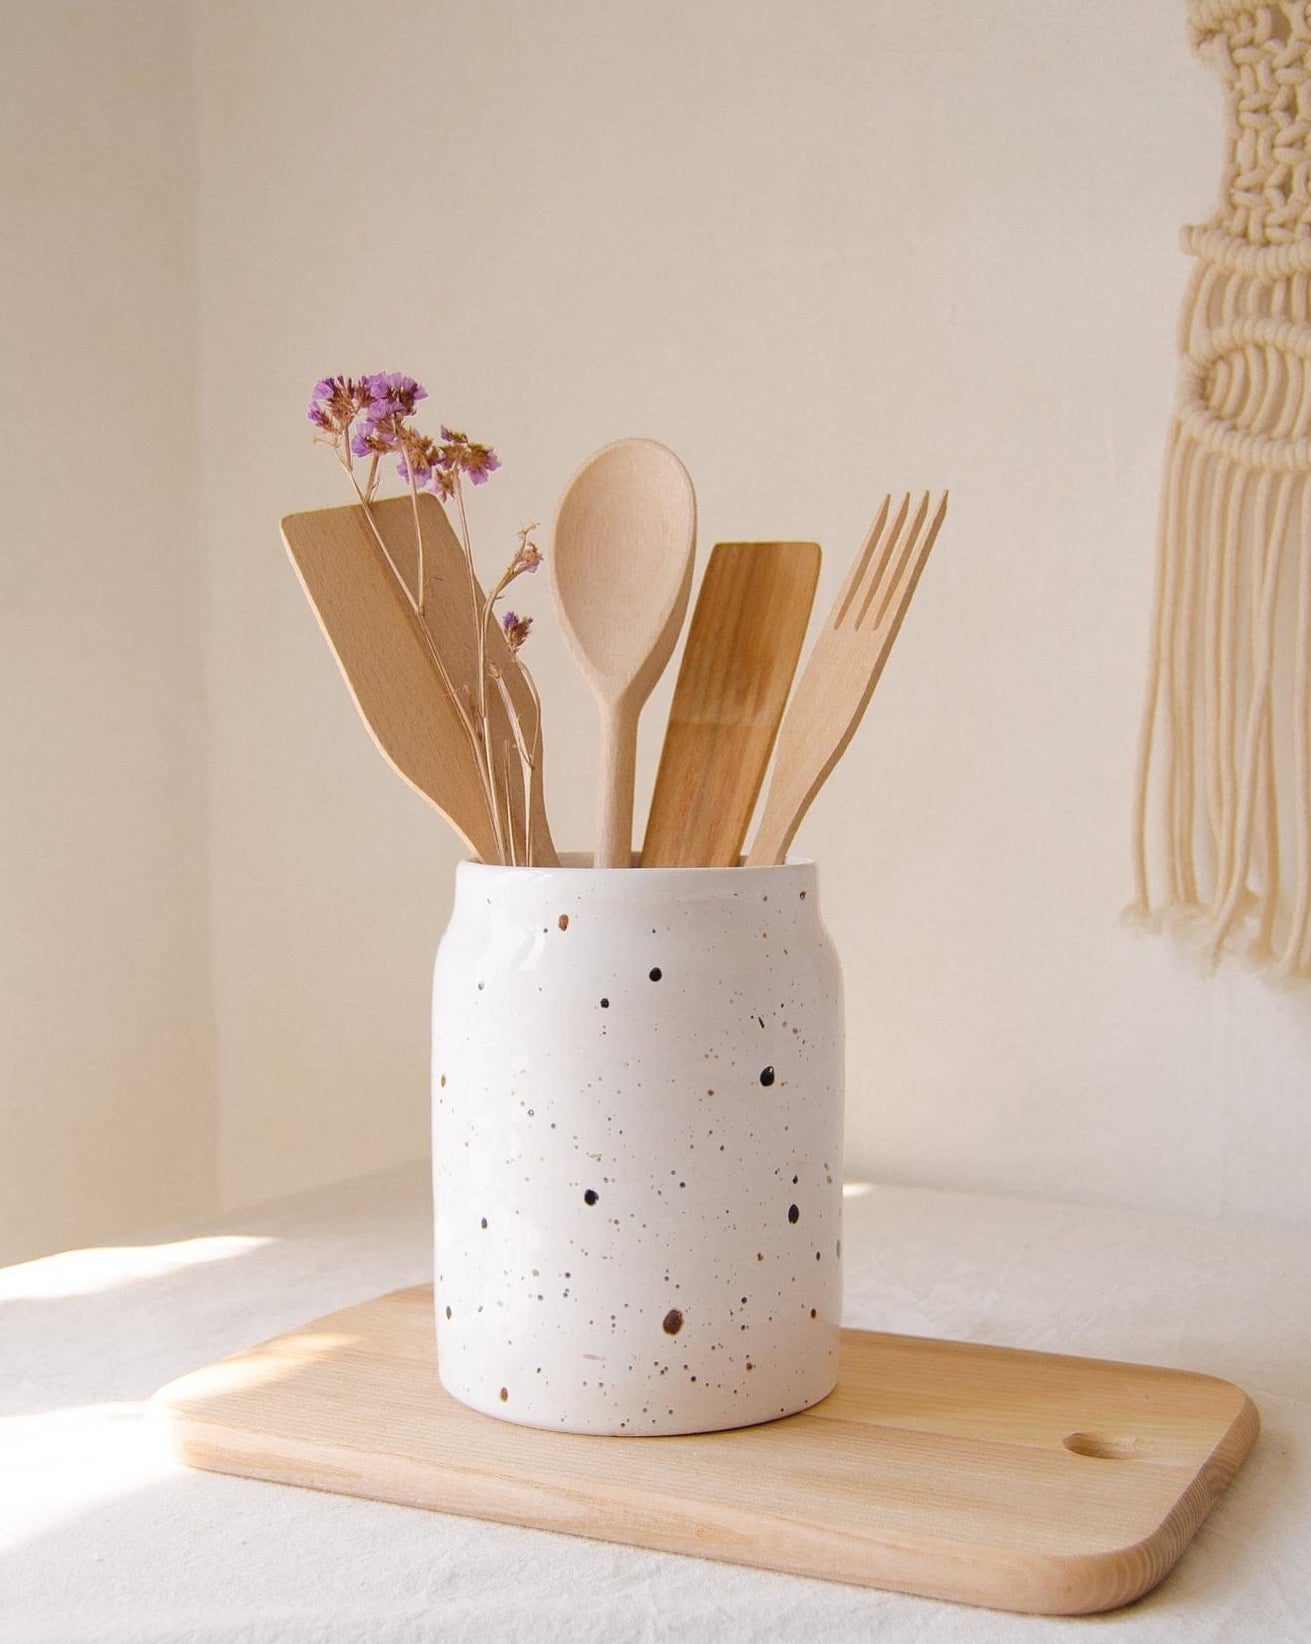 wooden utensils in a white speckled stoneware crock